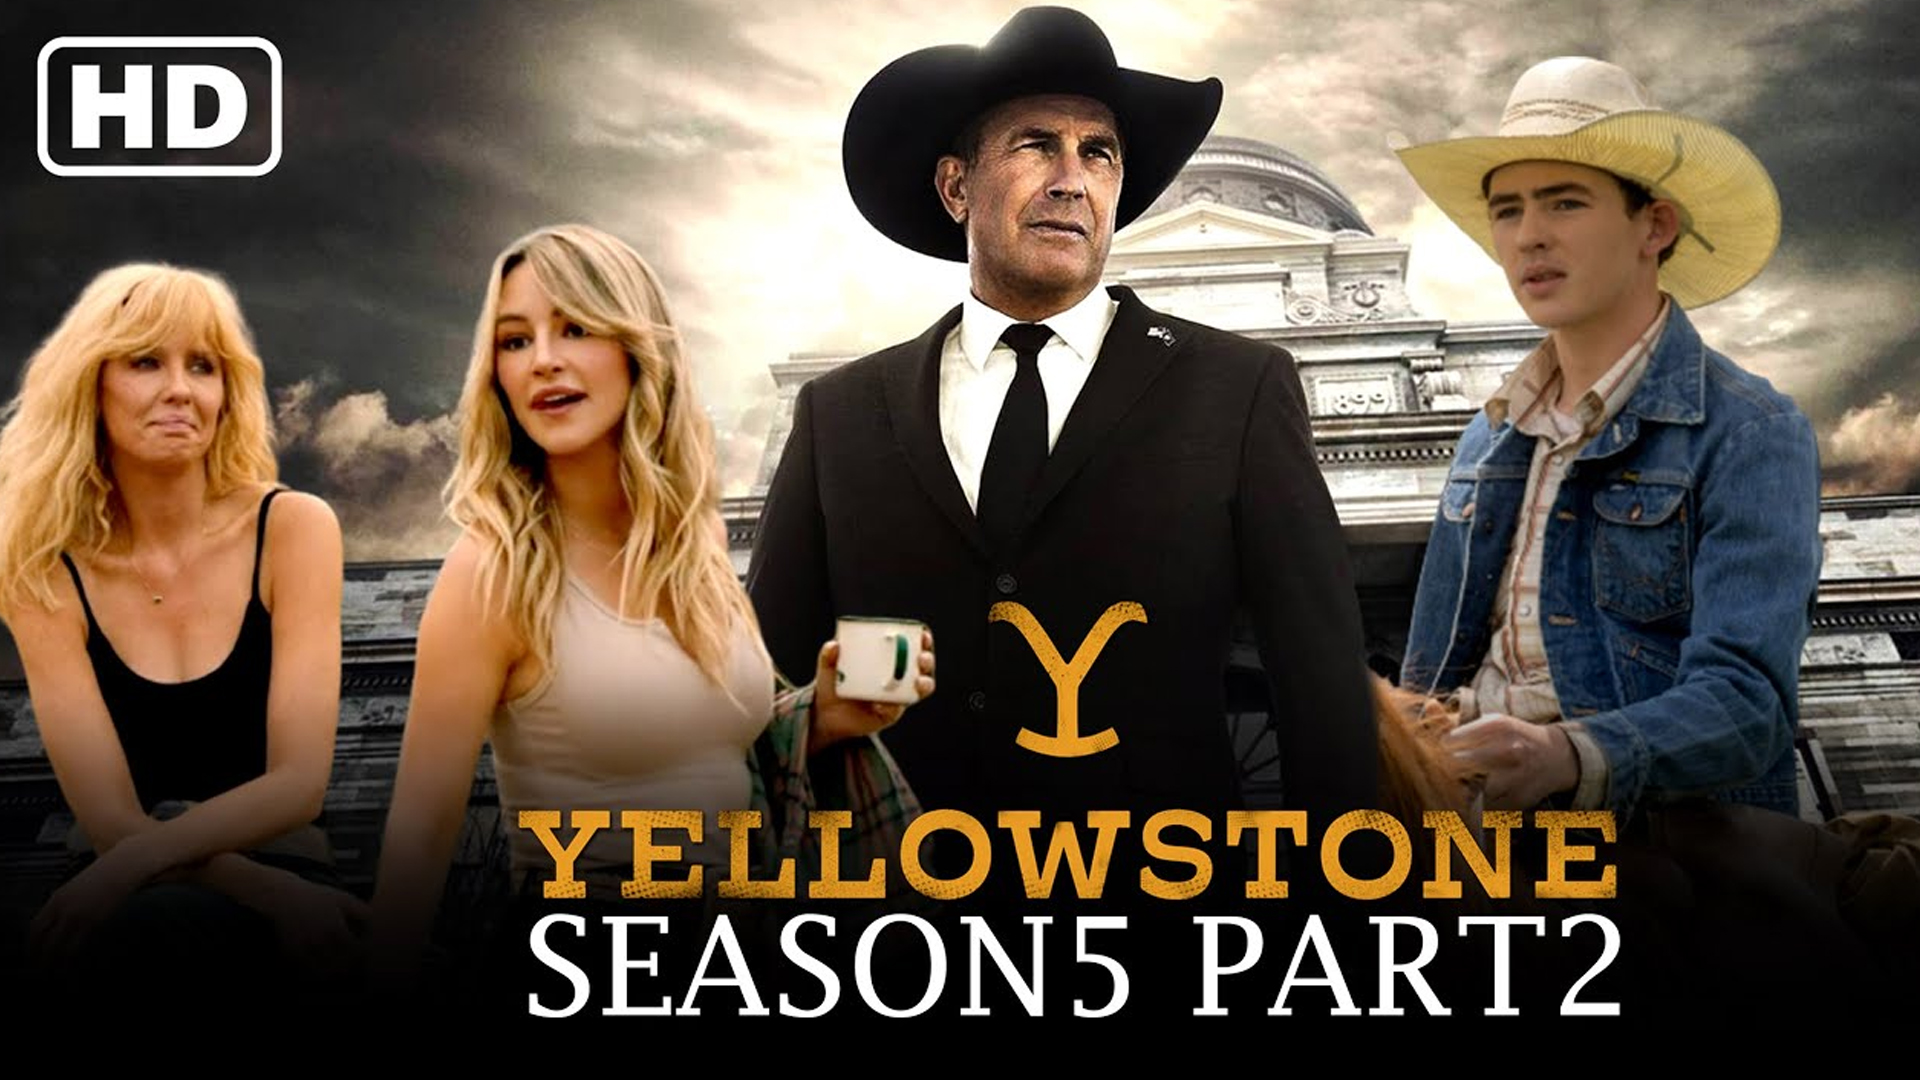 Yellowstone Season 5 Part 2